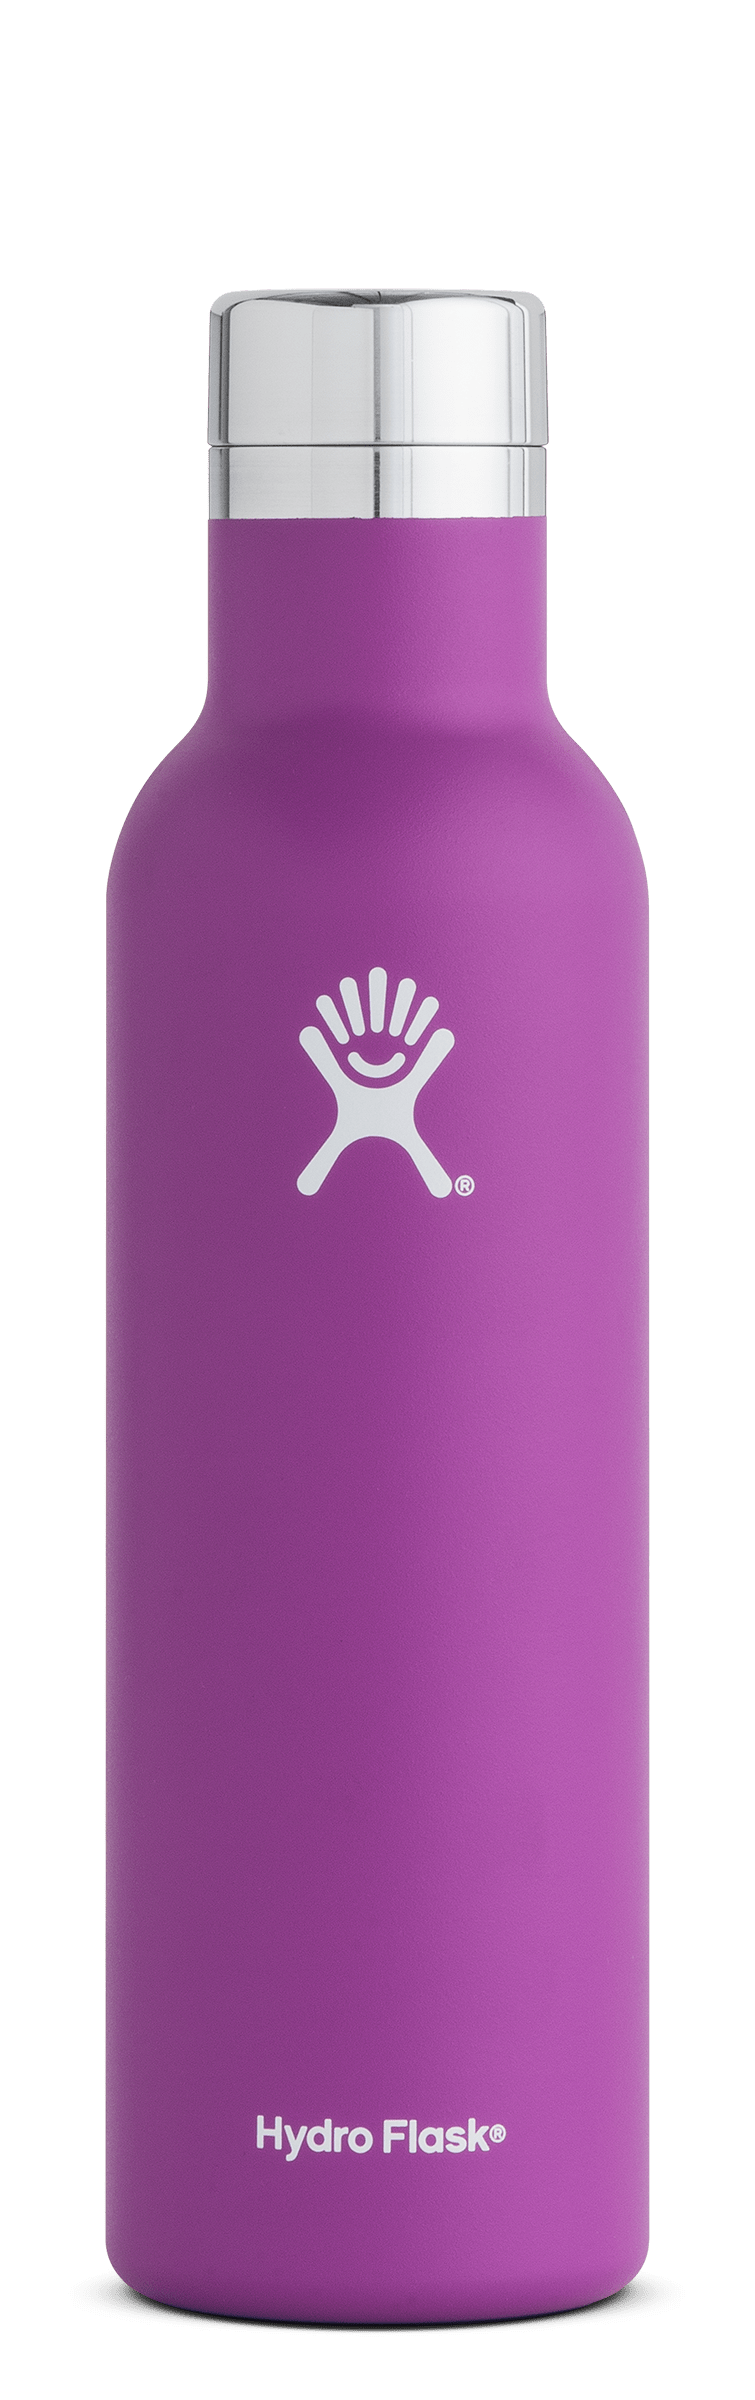 Reusable Hydro Flask Transparent Images